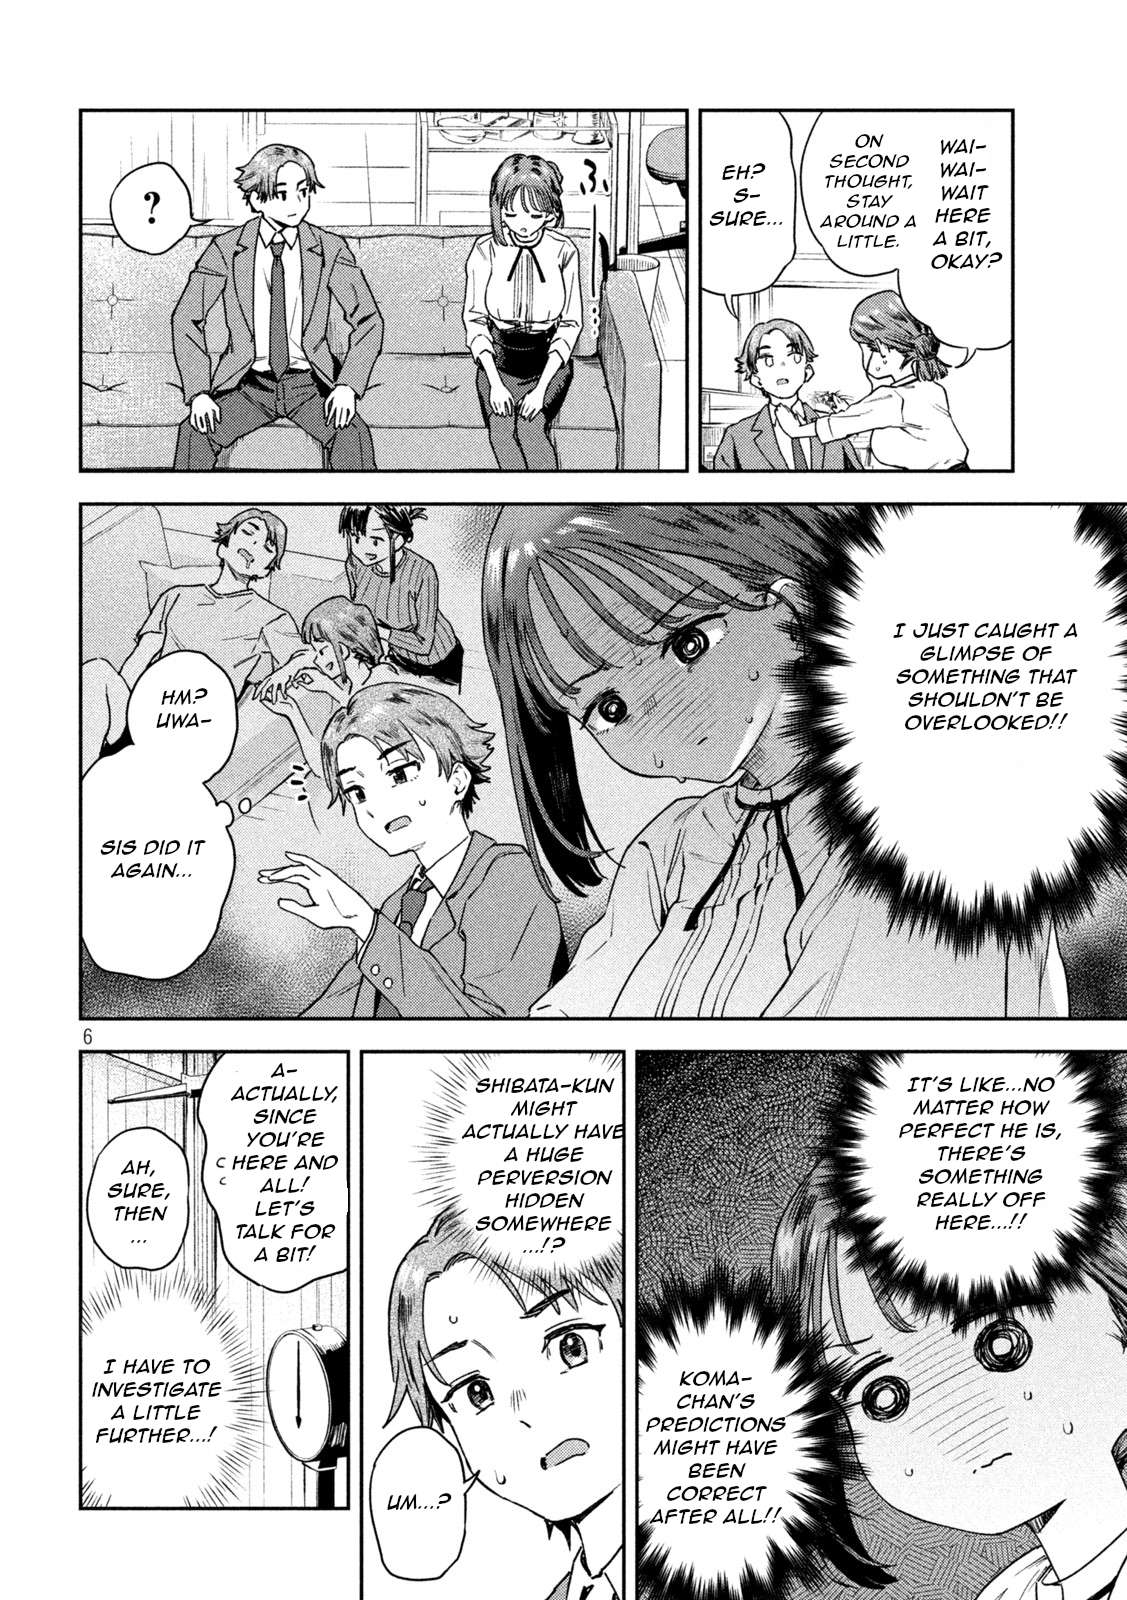 Miyo-Chan Sensei Said So - chapter 7 - #6